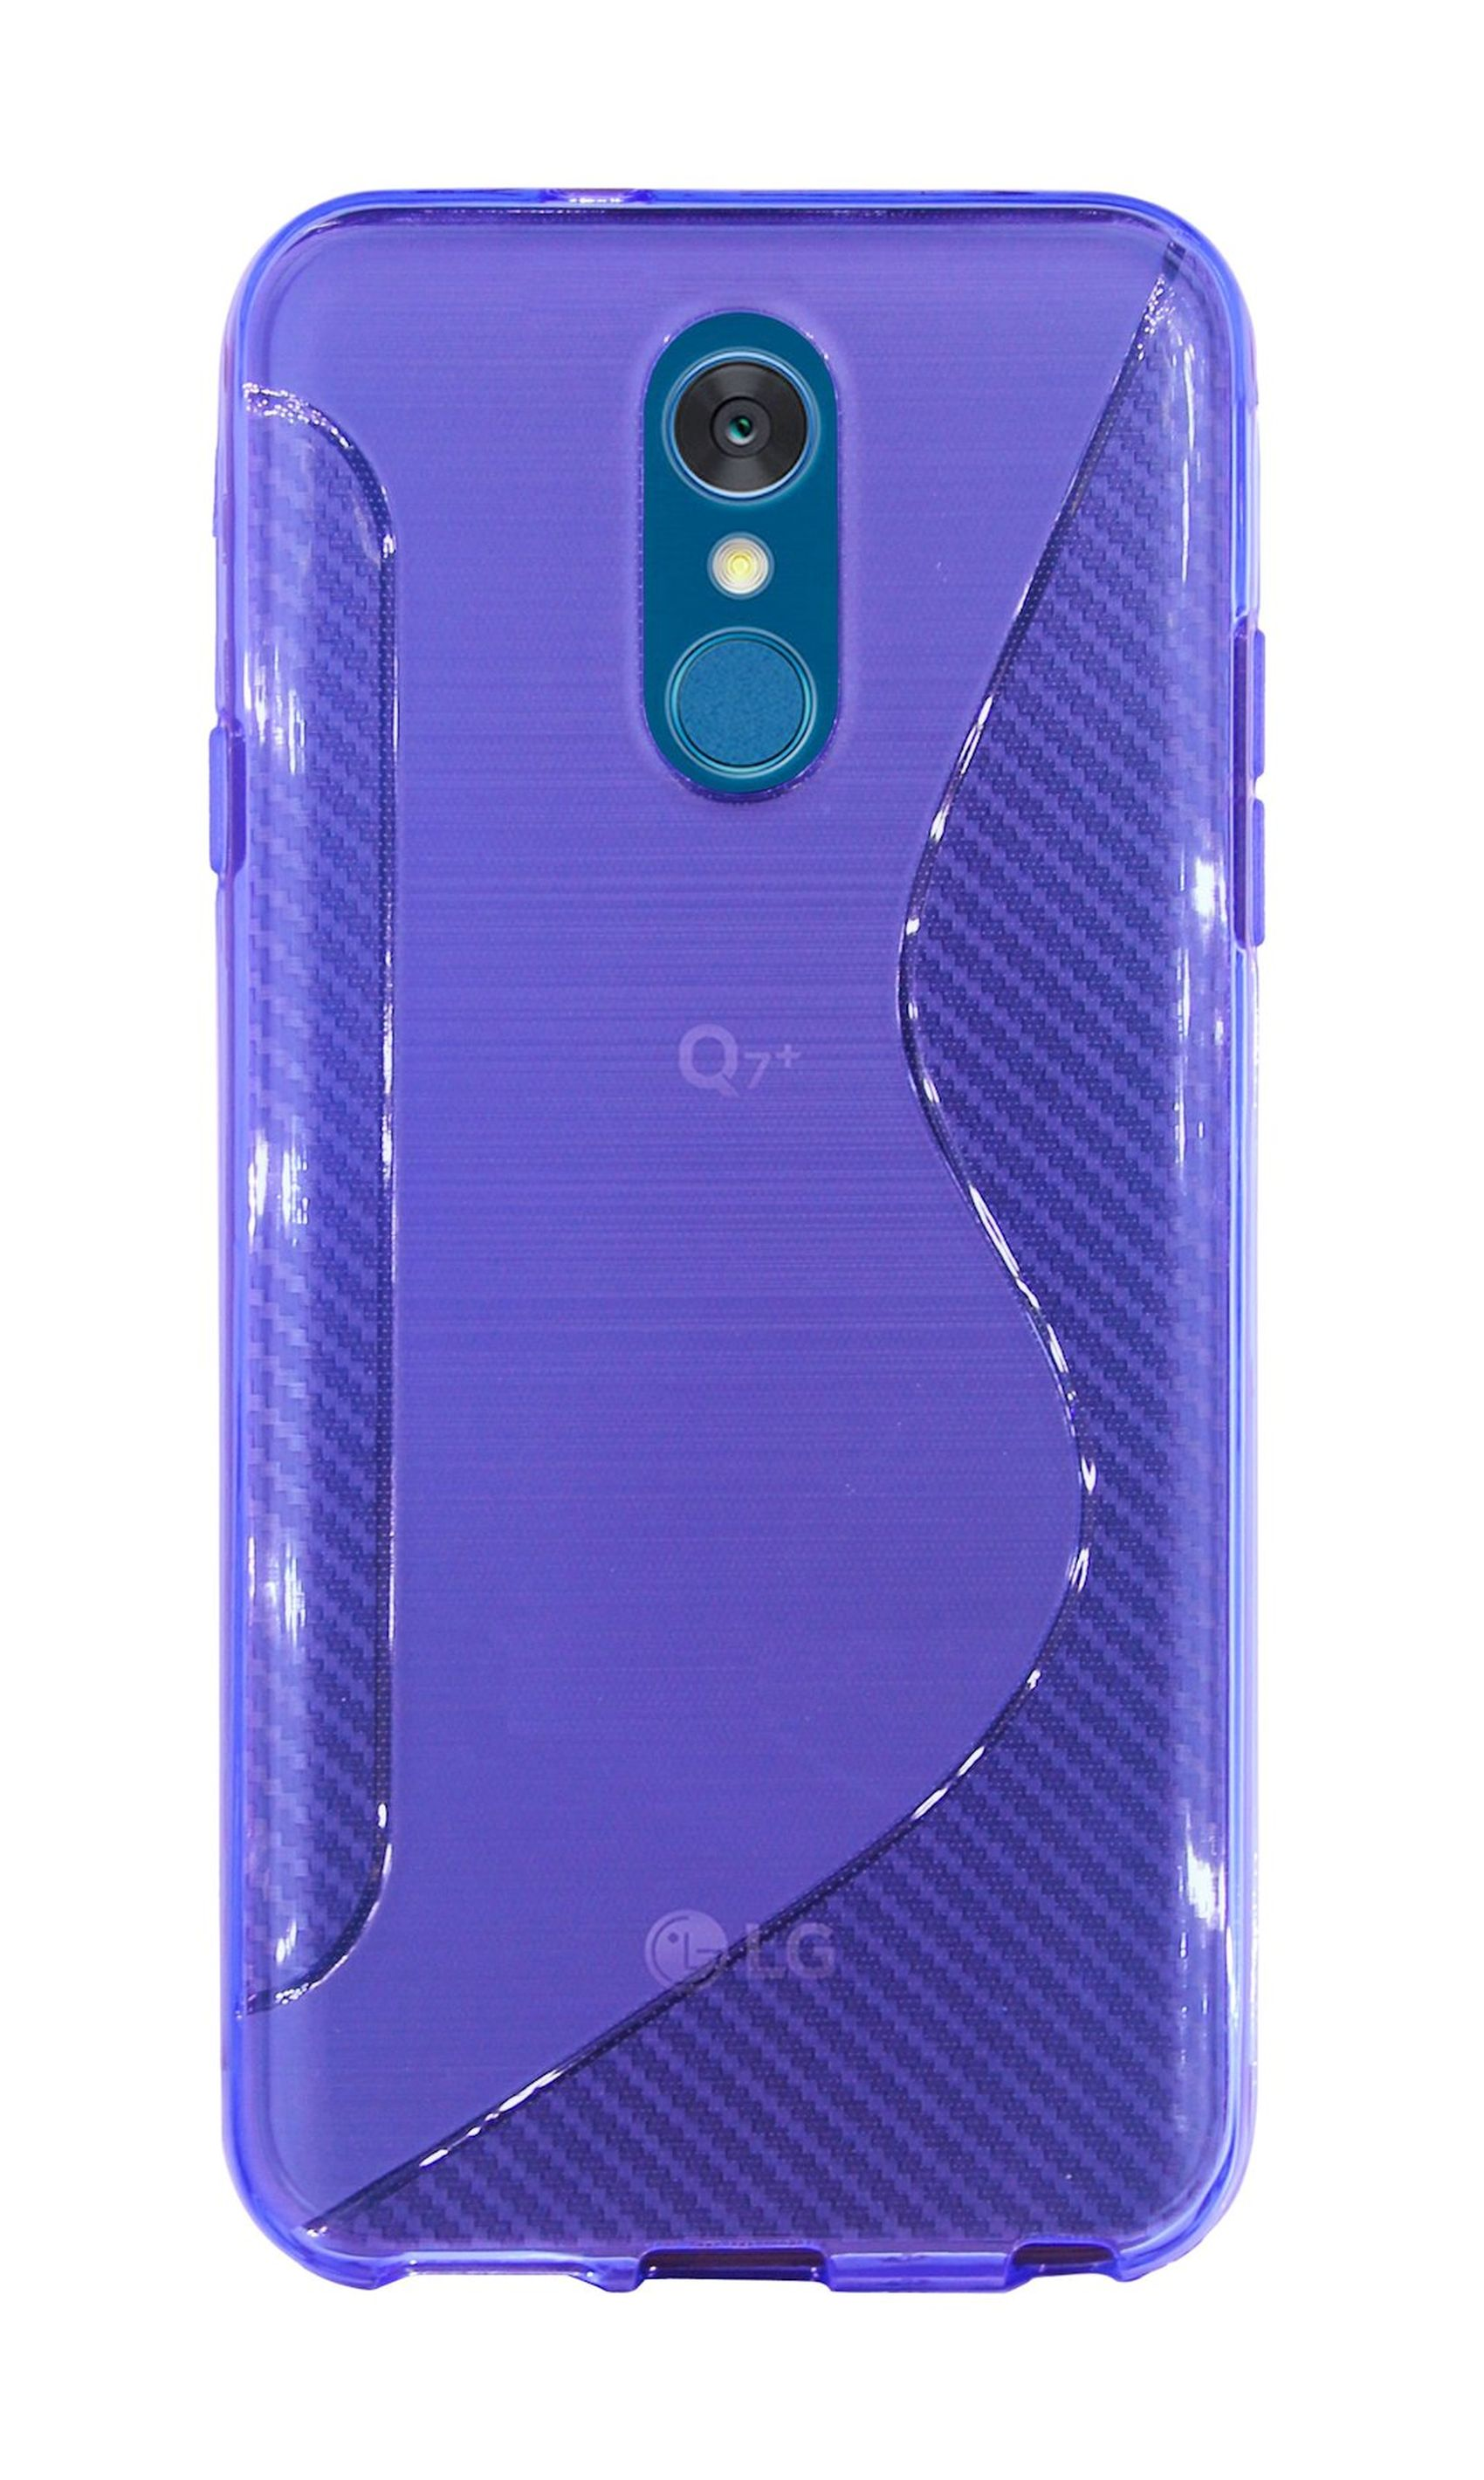 S-Line Violett COFI Q7a, LG, Cover, Bumper,